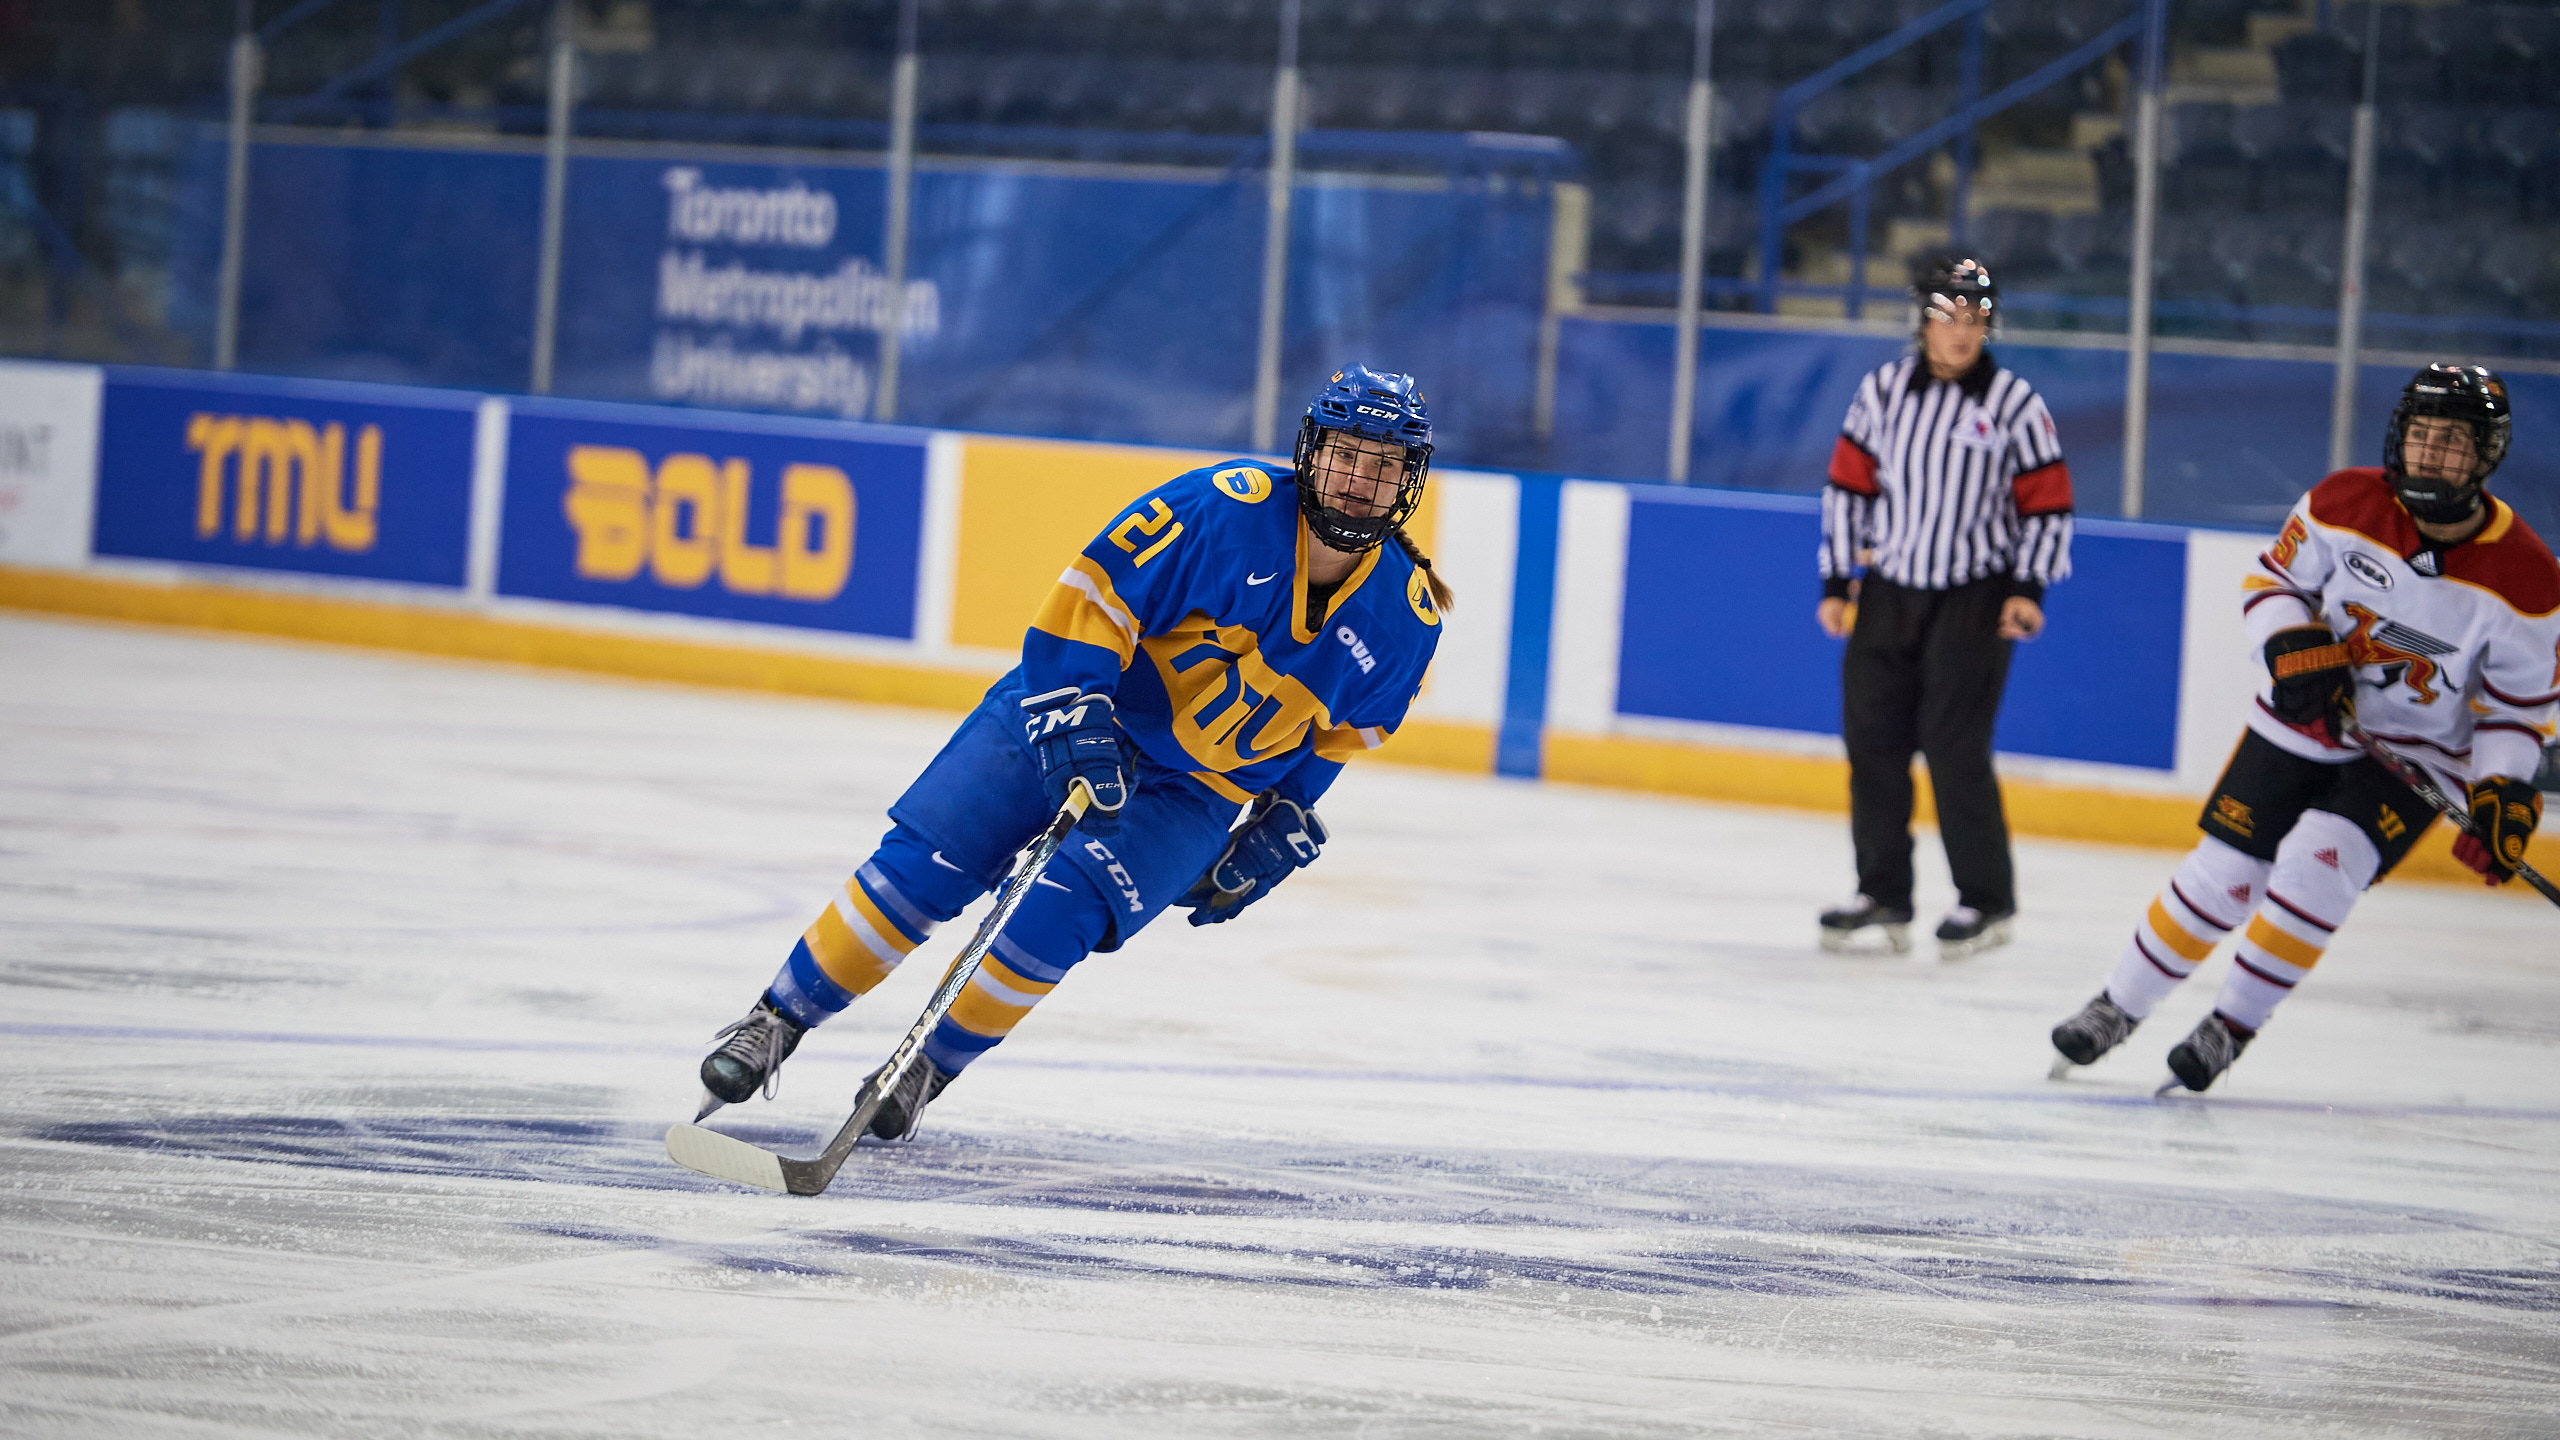 TMU women's hockey player Emily Baxter skates on the ice